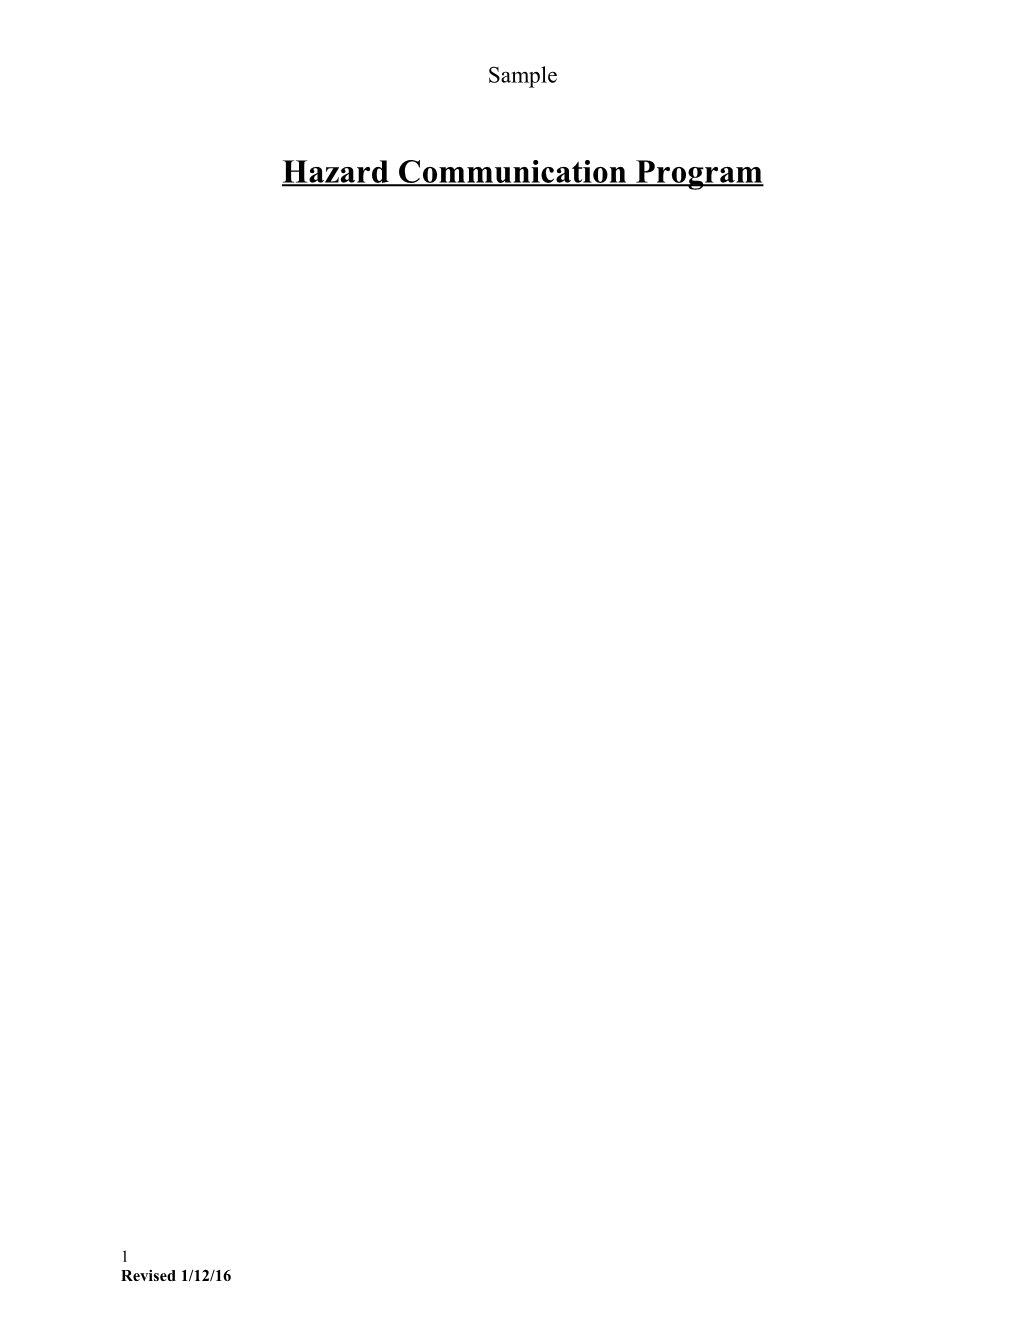 Sample Haz Com Program s1